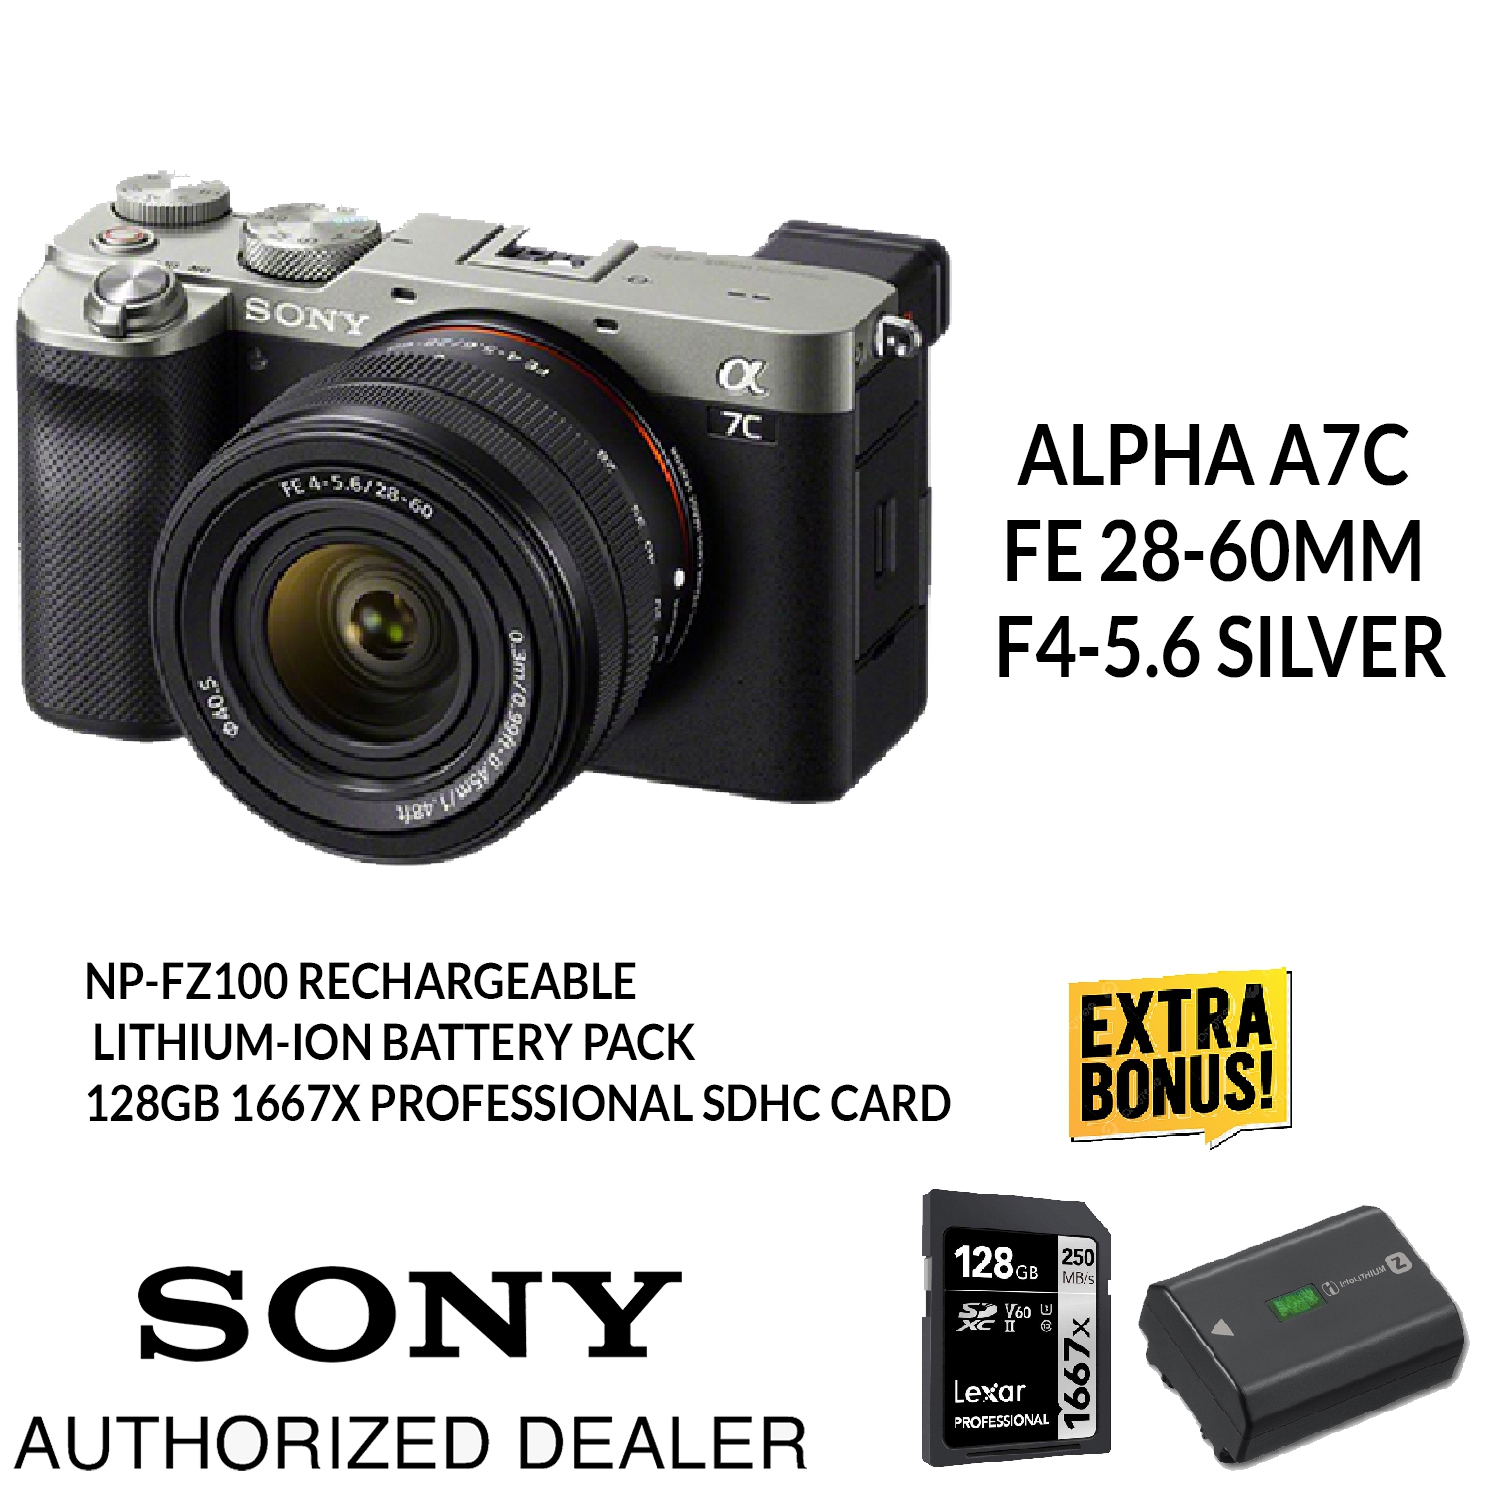 Sony Alpha a7C FE 28-60mm F4-5.6 Silver BONUS: Card and Battery.